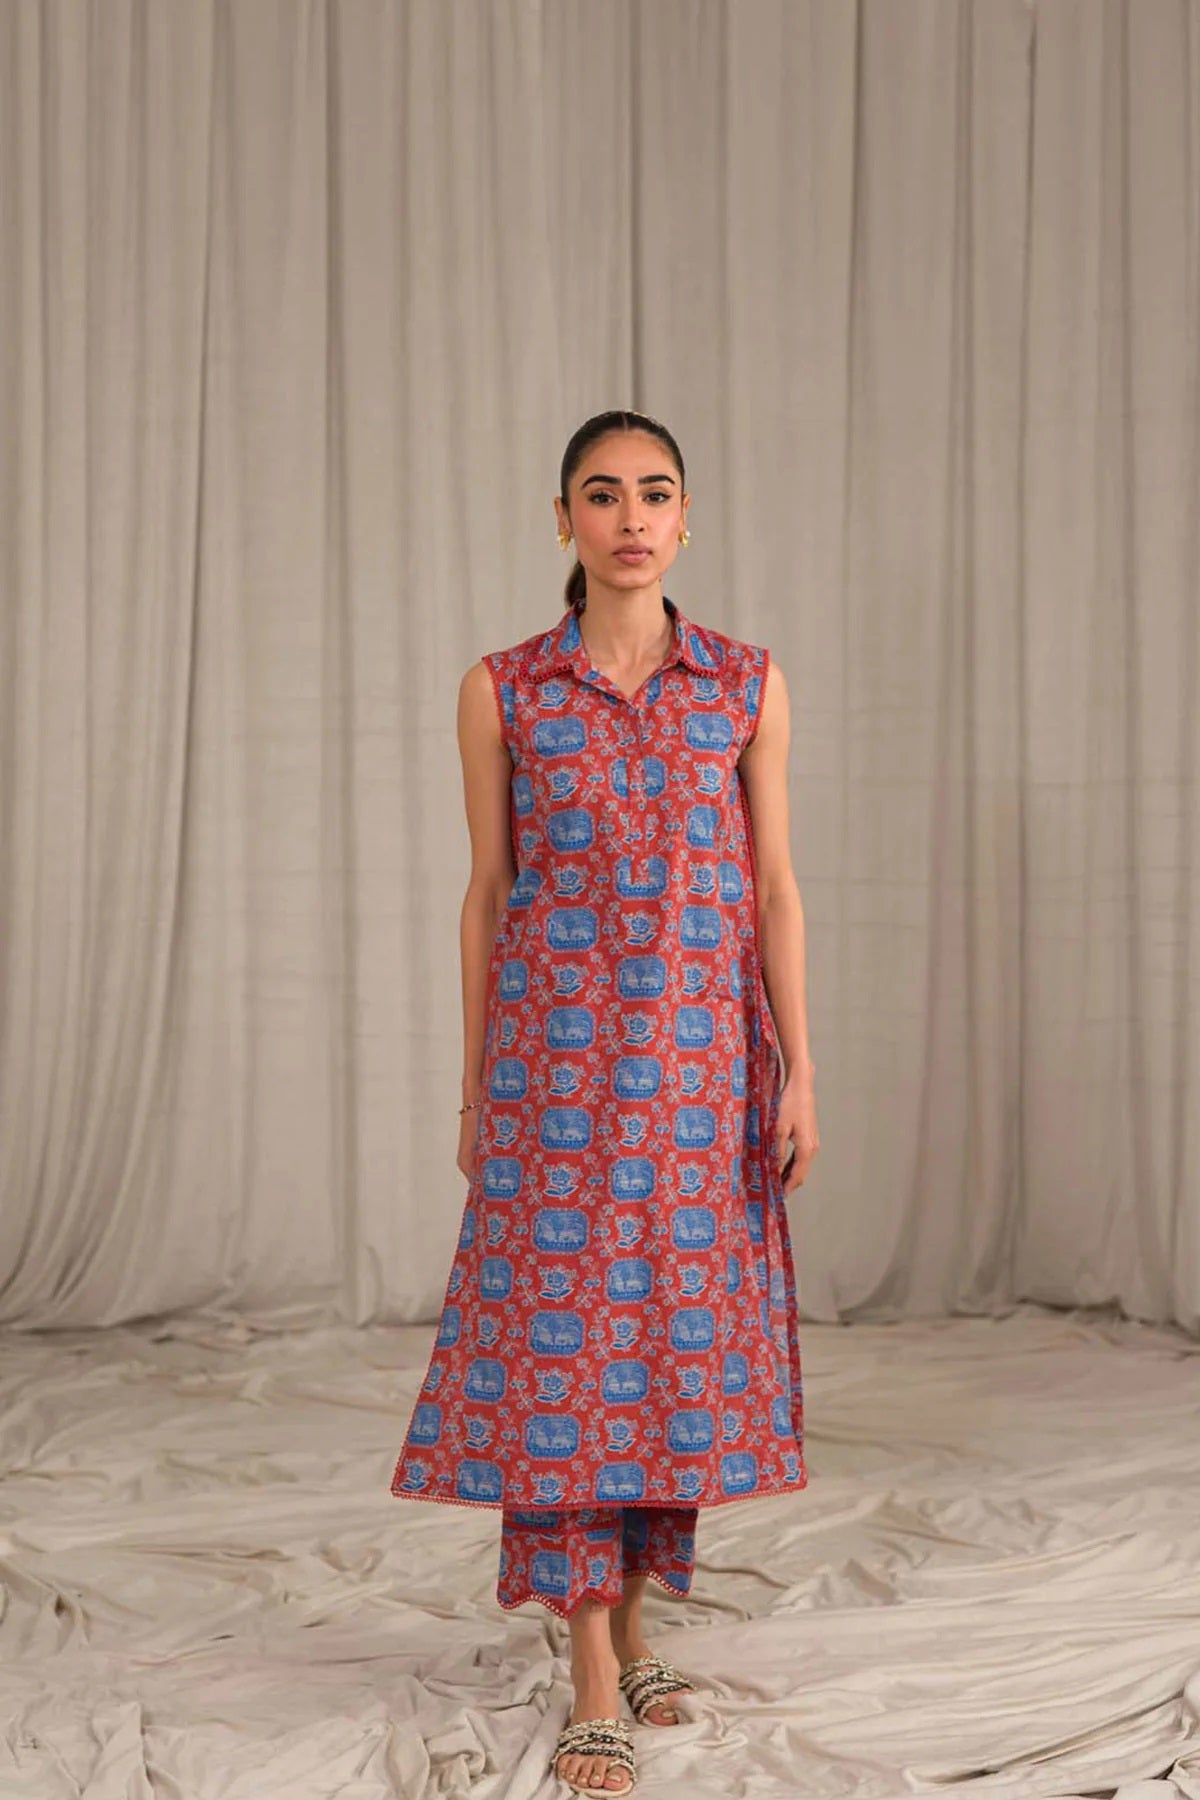 Sahar Printed Lawn Suits Unstitched 2 Piece SHR-S24-PL-V1-14 - Summer Collection